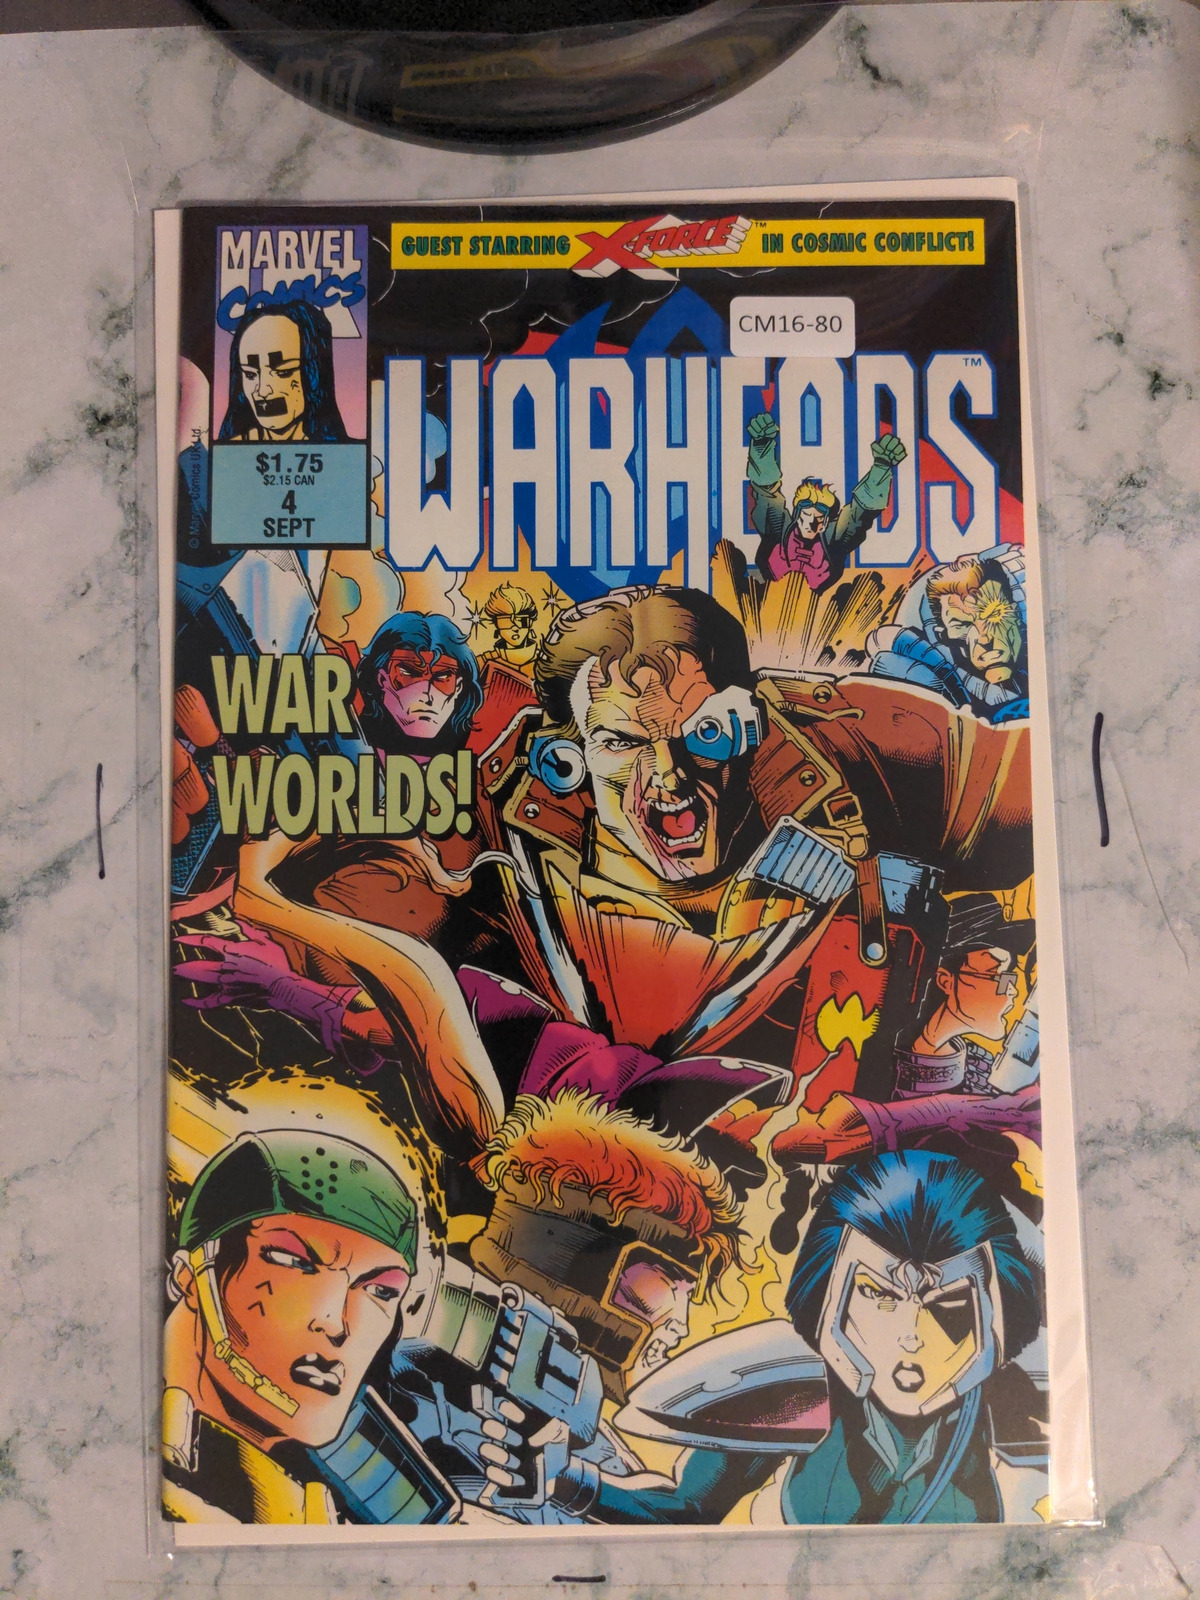 WARHEADS #4 9.0 MARVEL UK COMIC BOOK CM16-80